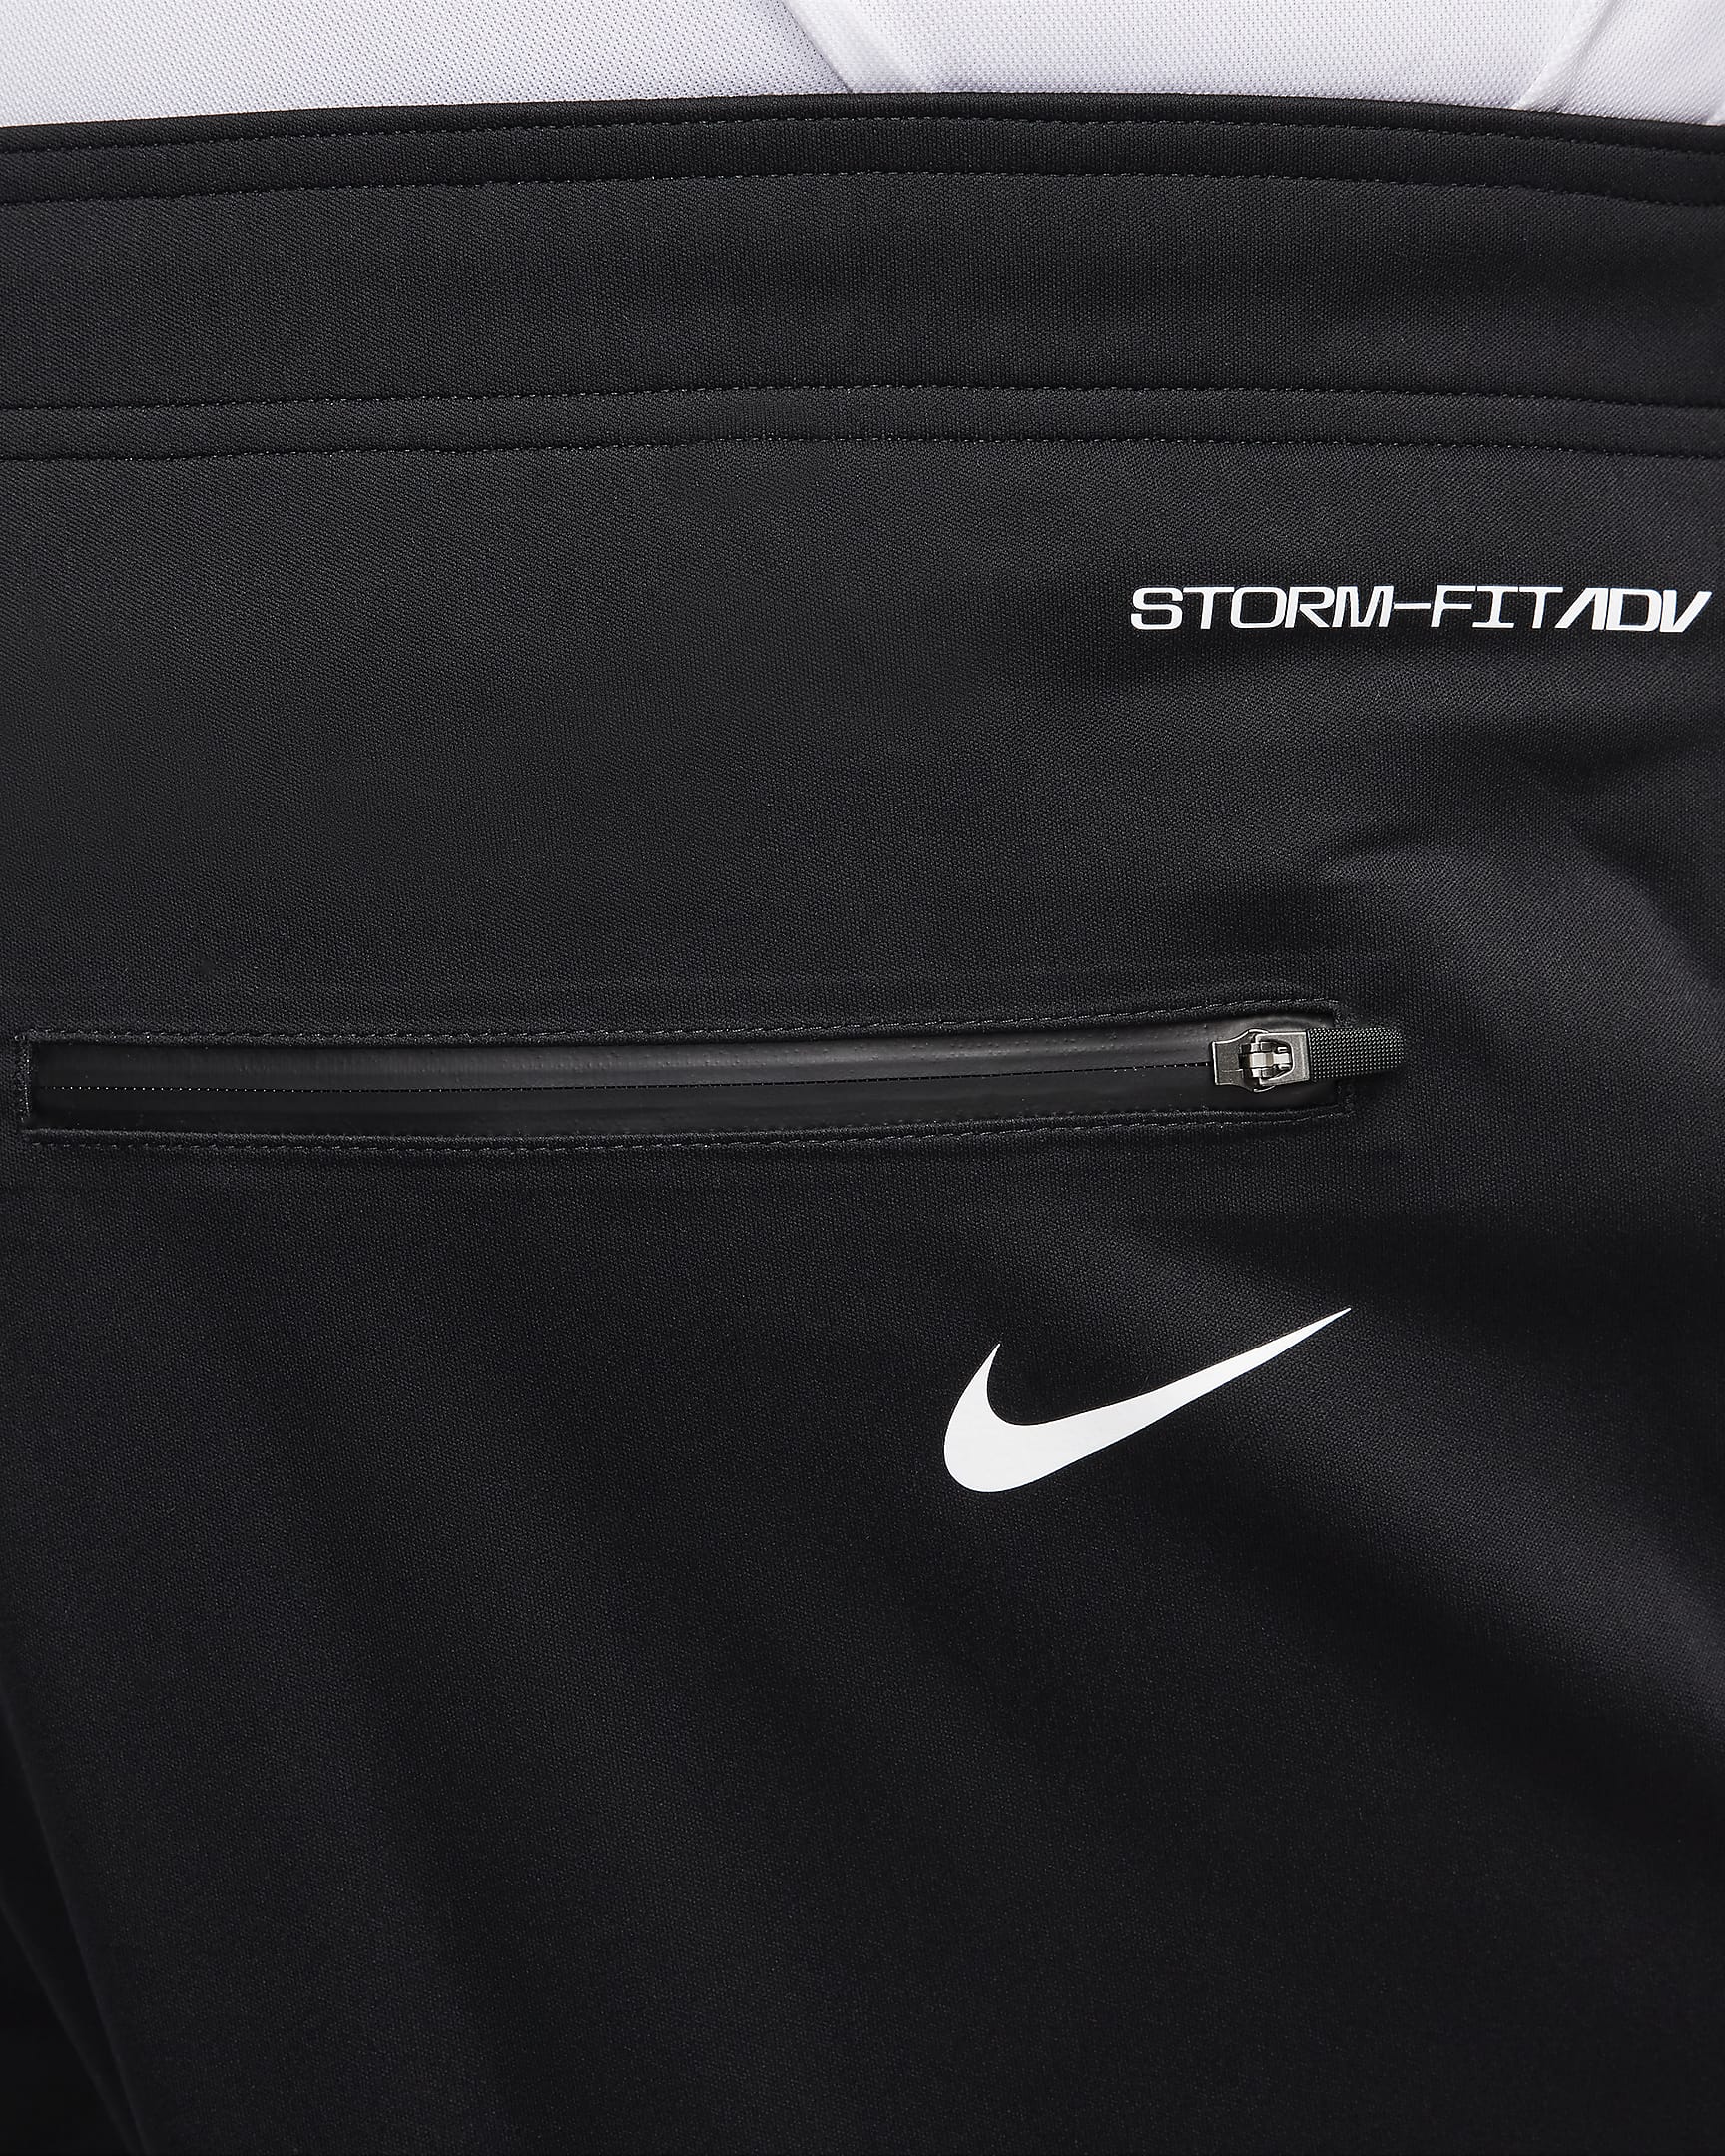 Nike Storm-FIT ADV Men's Golf Trousers. Nike RO